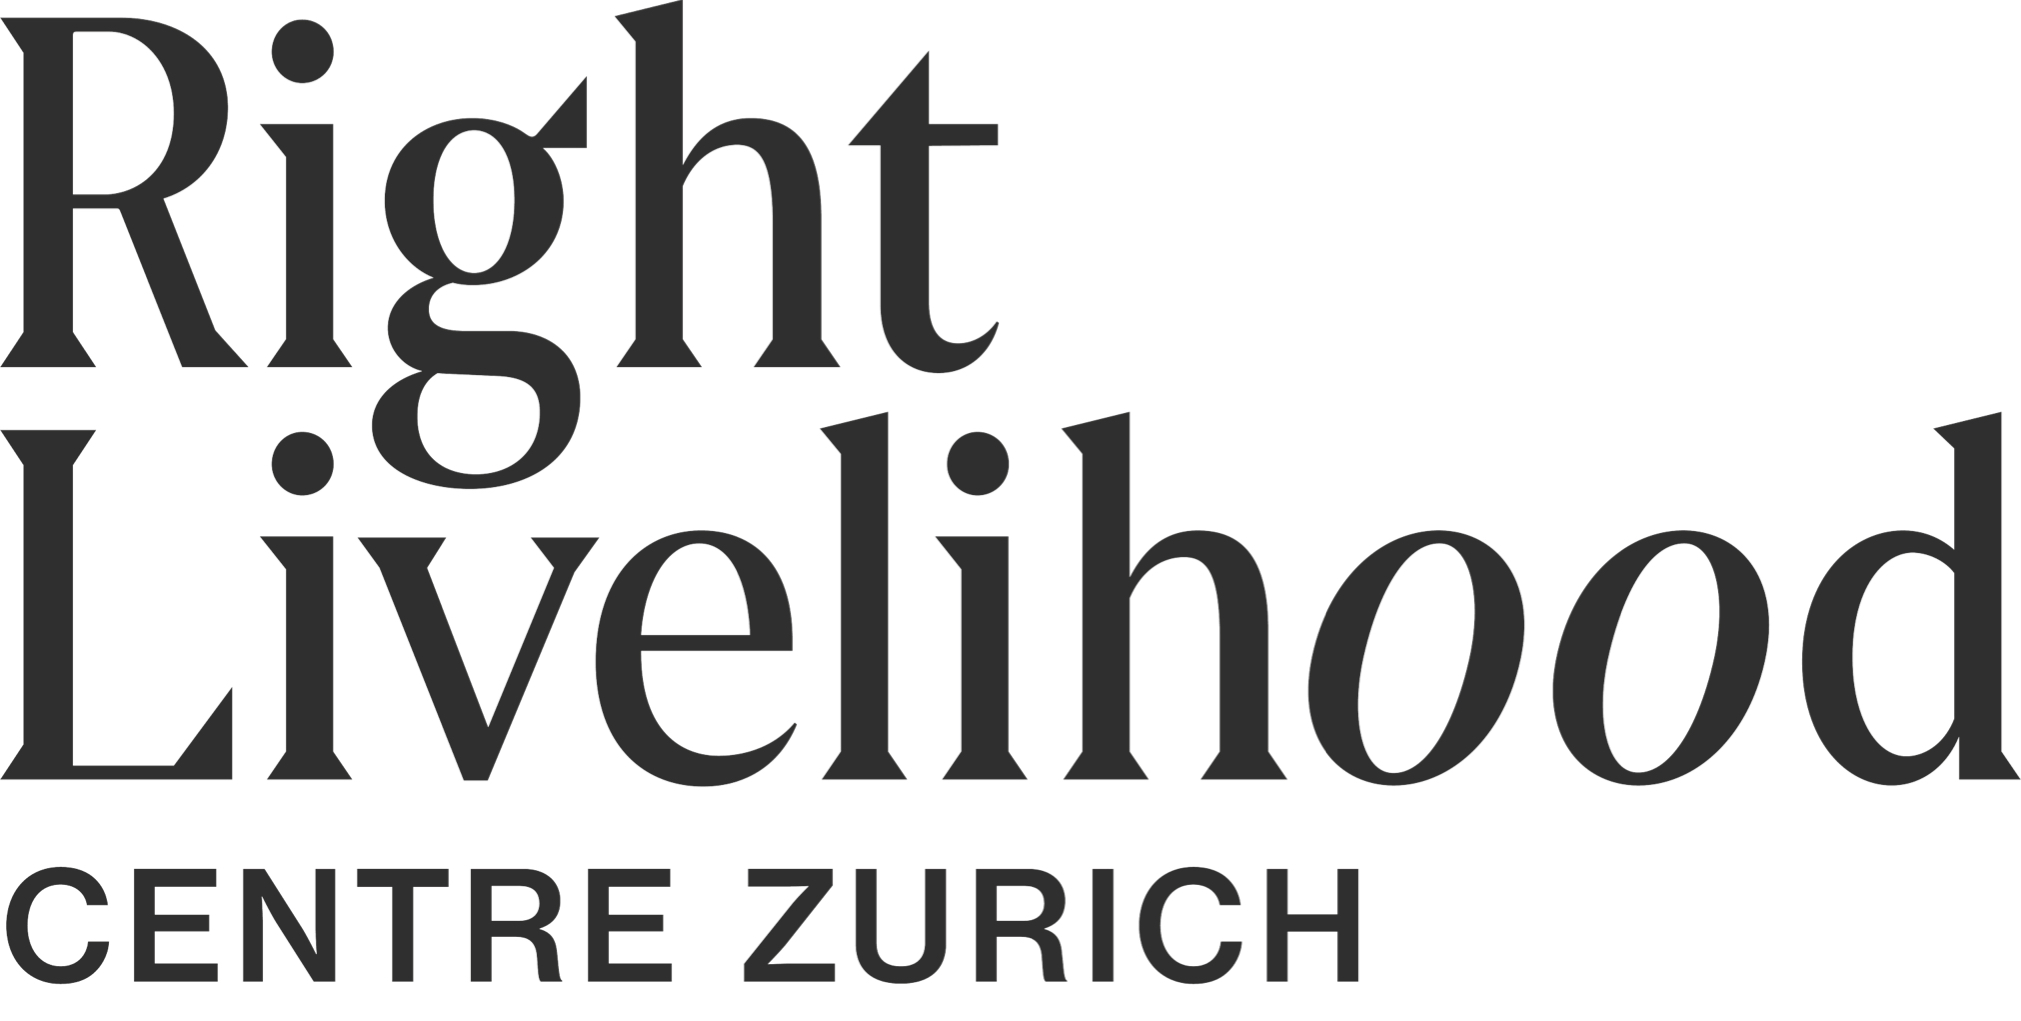 Right Livelihood Centre Logo